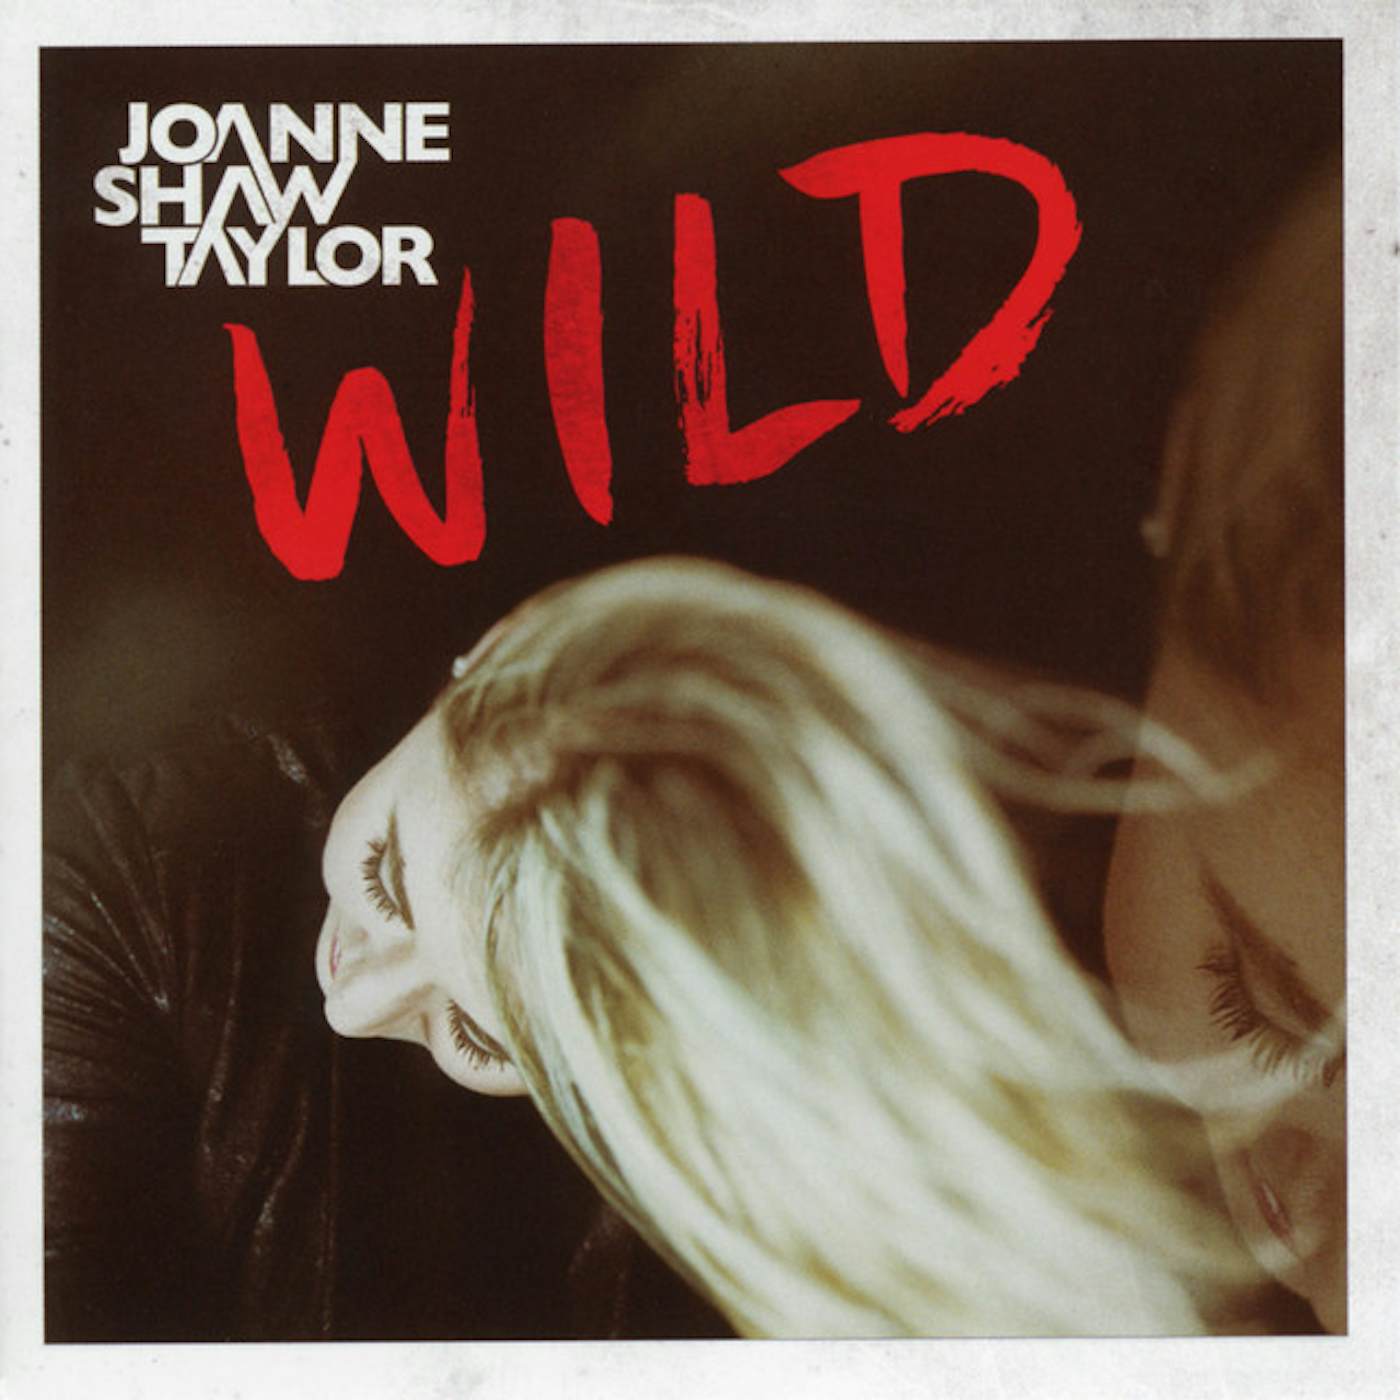 Joanne Shaw Taylor Wild Vinyl Record